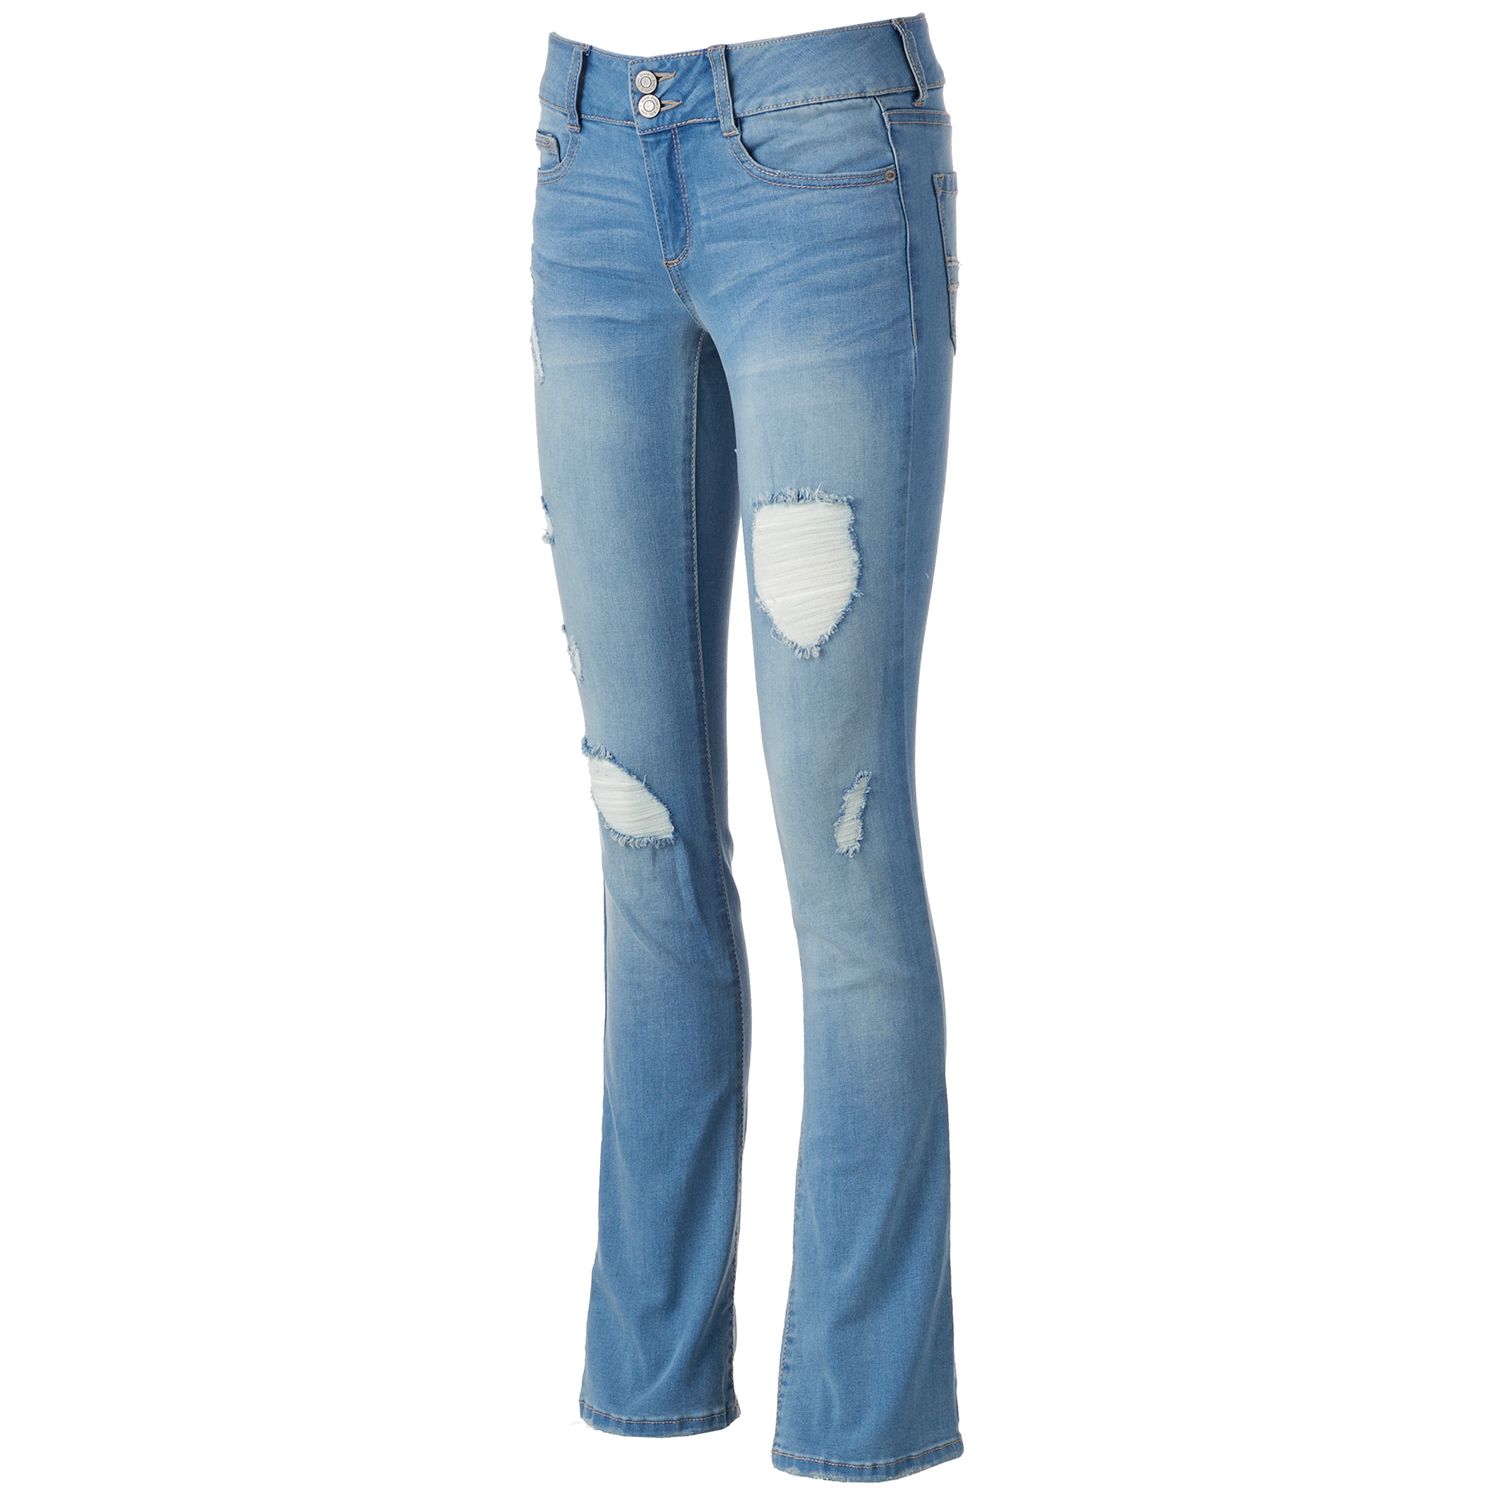 abercrombie carpenter jeans